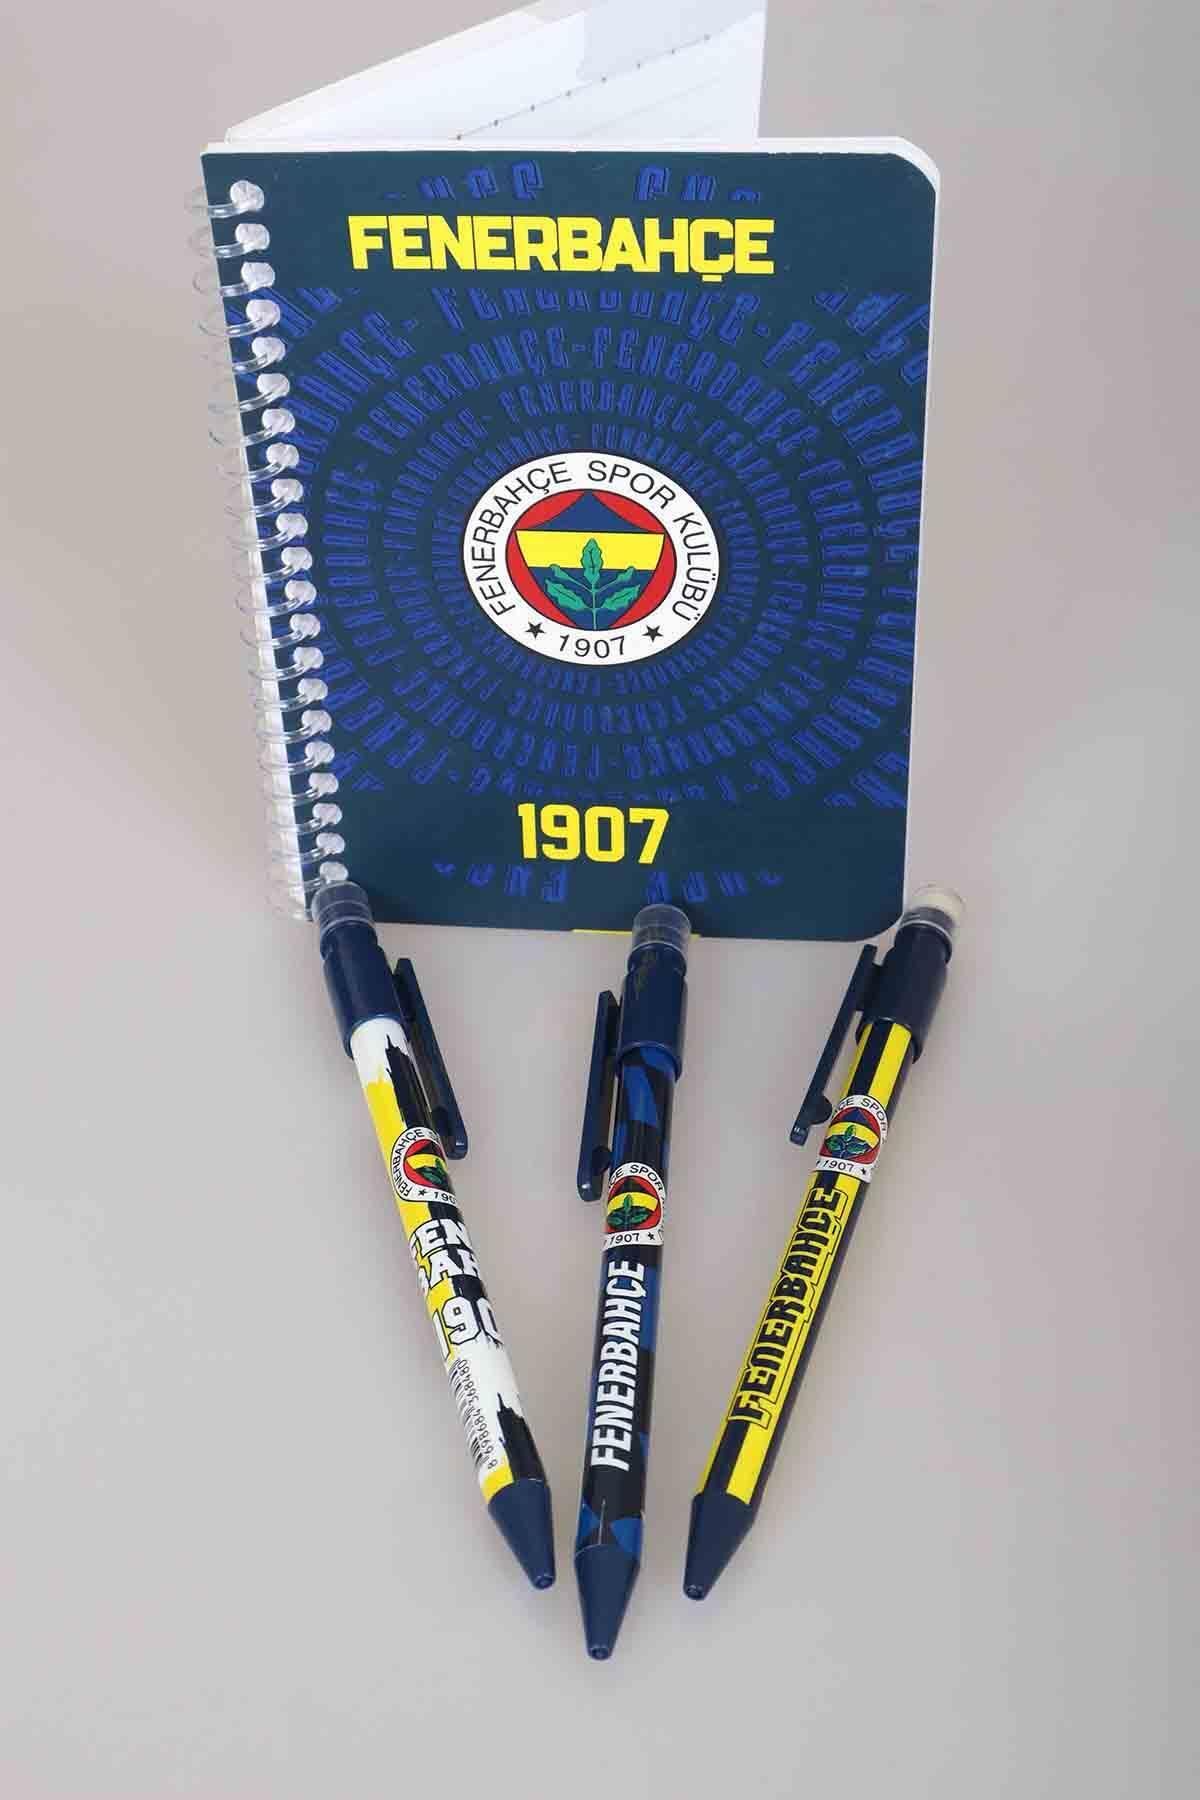 Fenerbahçe LİSANSLI FENERBAHÇE SERT KAPAK BLOKNOT VE VERSATİL UÇLU KALEM 0.7 MM 2'LİSİ